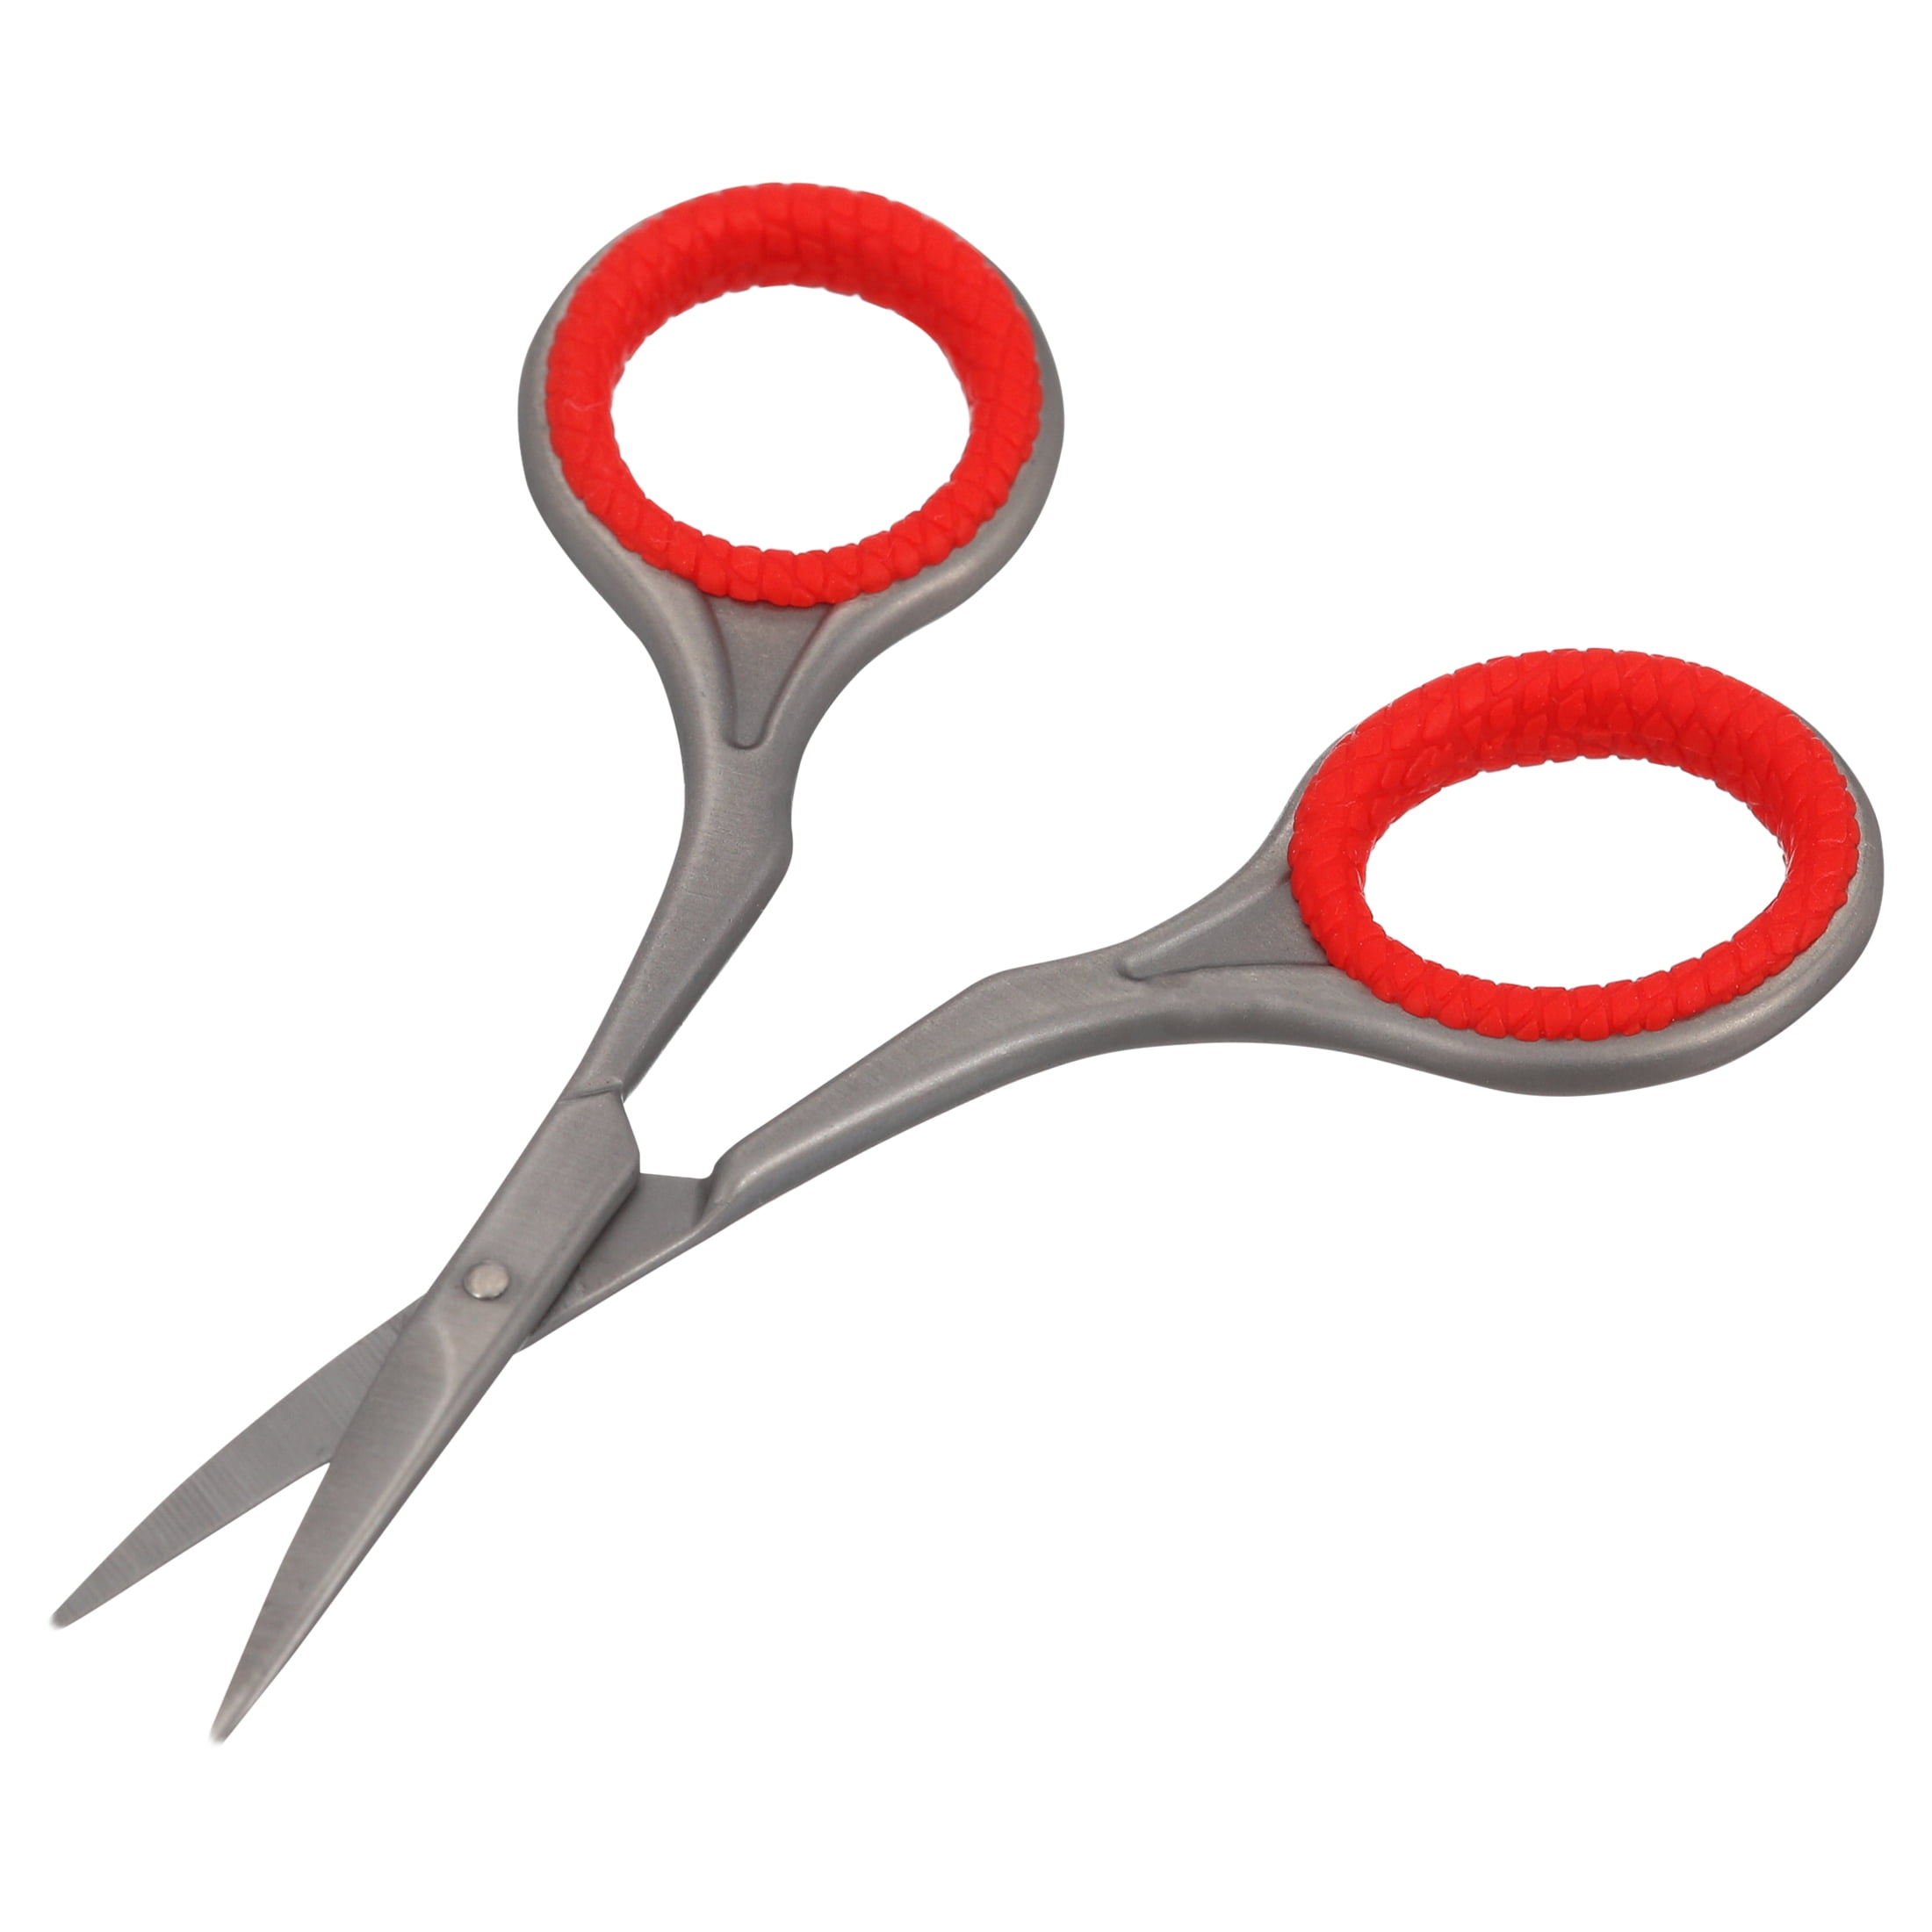 ZIZZLON Cuticle Scissors Extra Fine Curved Blade Extra Slim